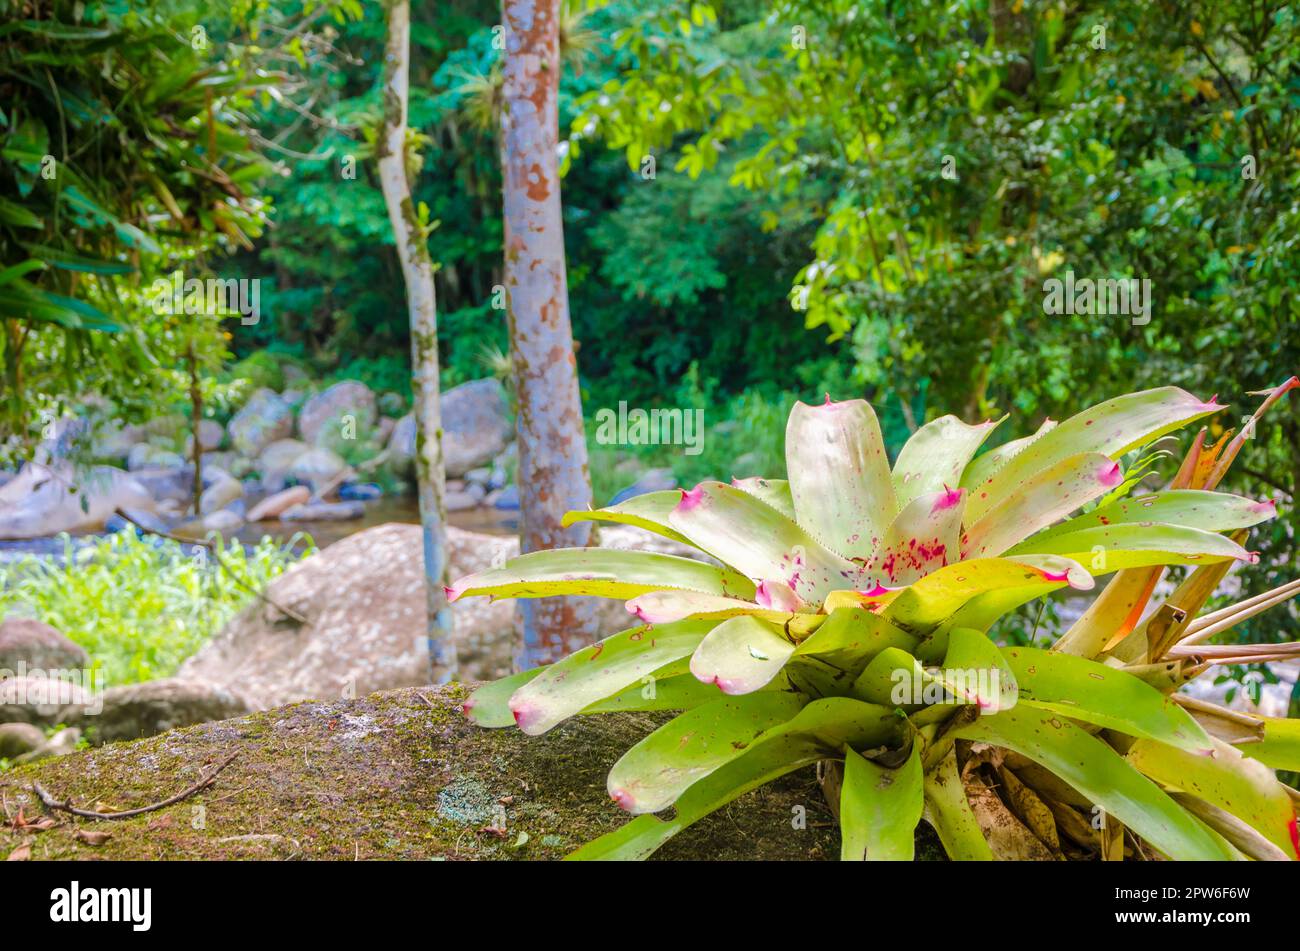 Large Marmorata Bromeliad Plant (bromelia quesnelia), Urban or Tropical plant, ornamental leaves grow upright like tentacles, river on background Stock Photo